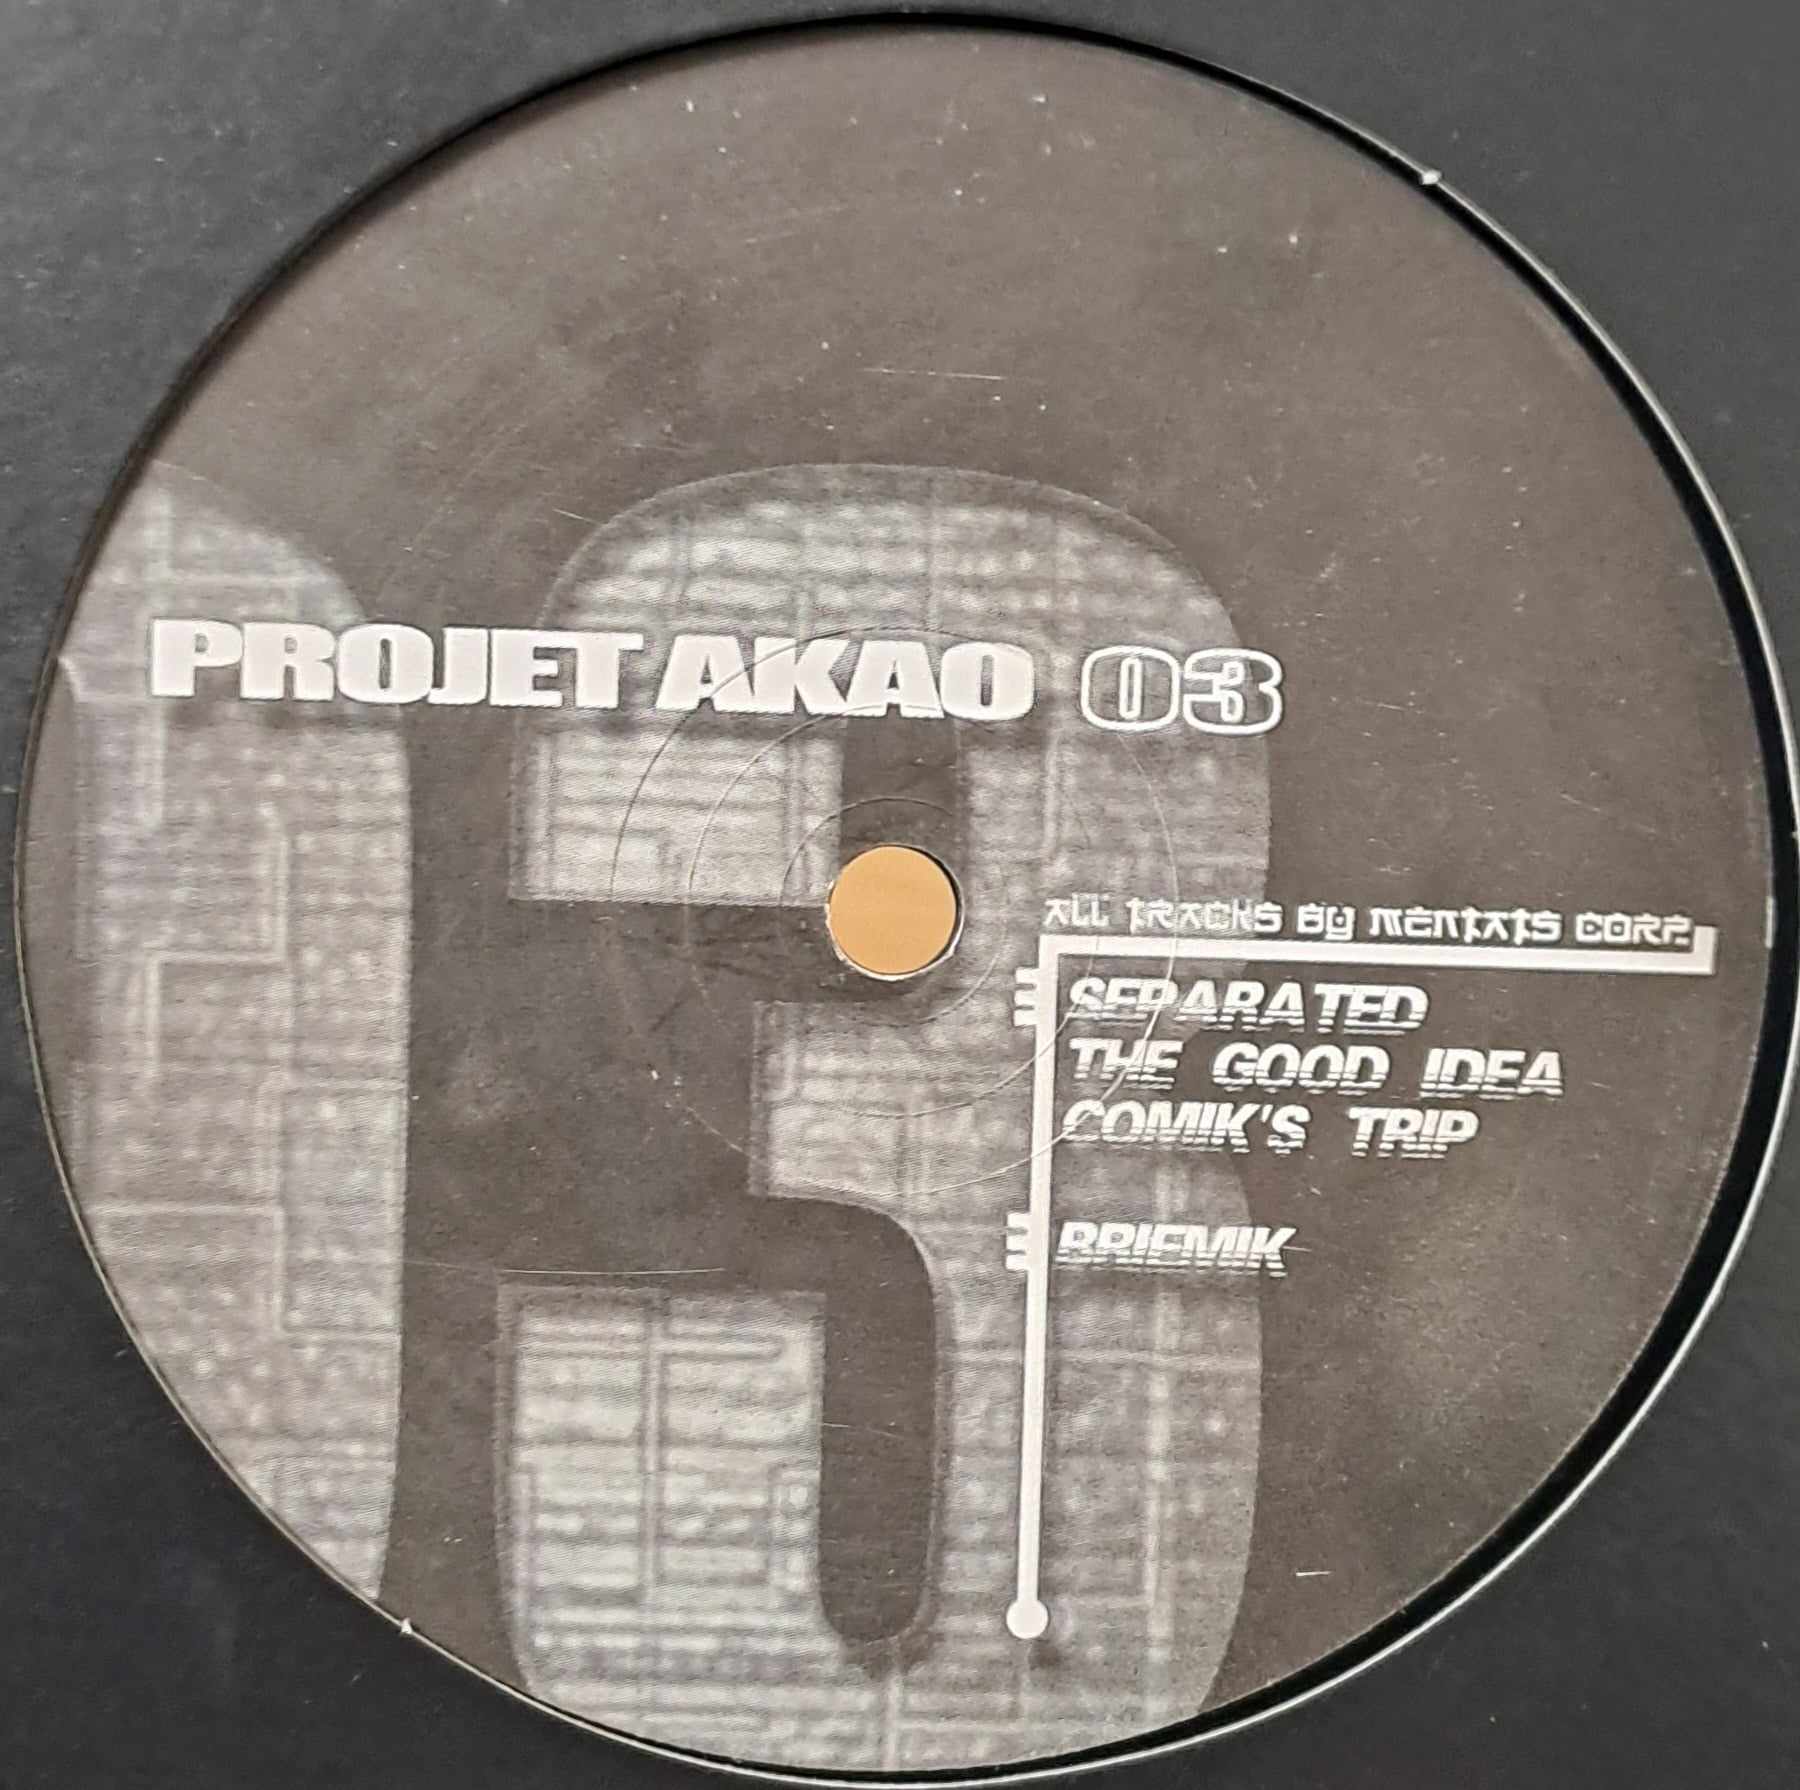 Projet Akao 003 - vinyle freetekno